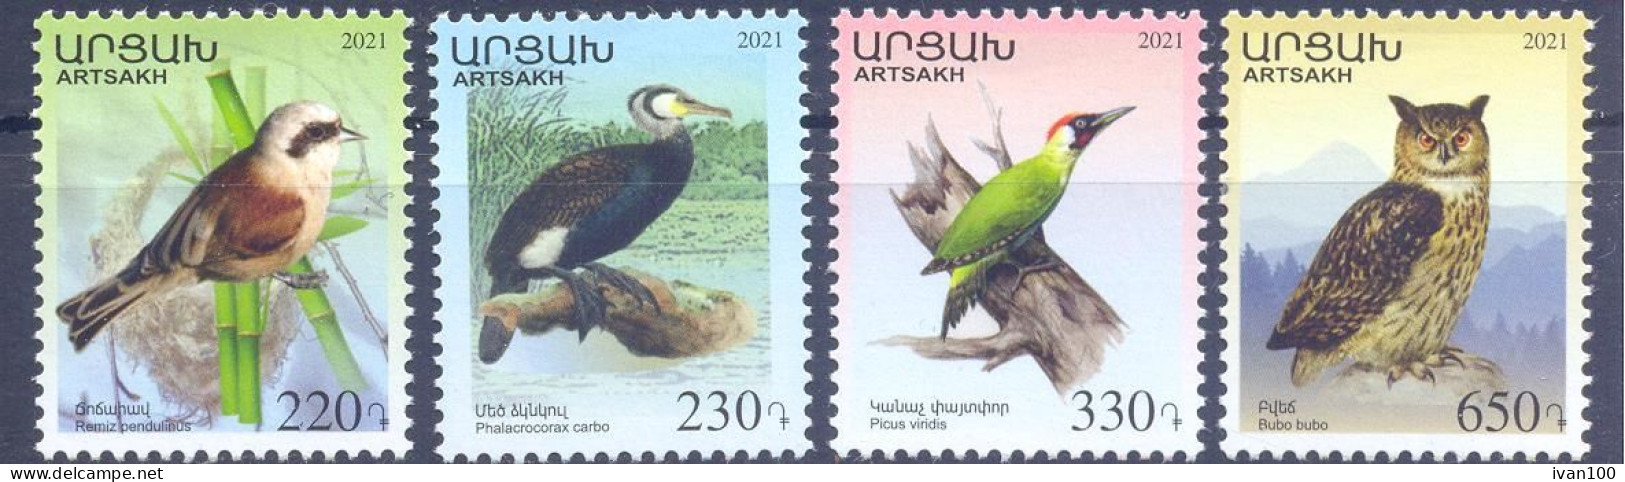 2021. Mountainous Karabakh, Birds Of Karabakh, 4v Perforated,  Mint/** - Arménie